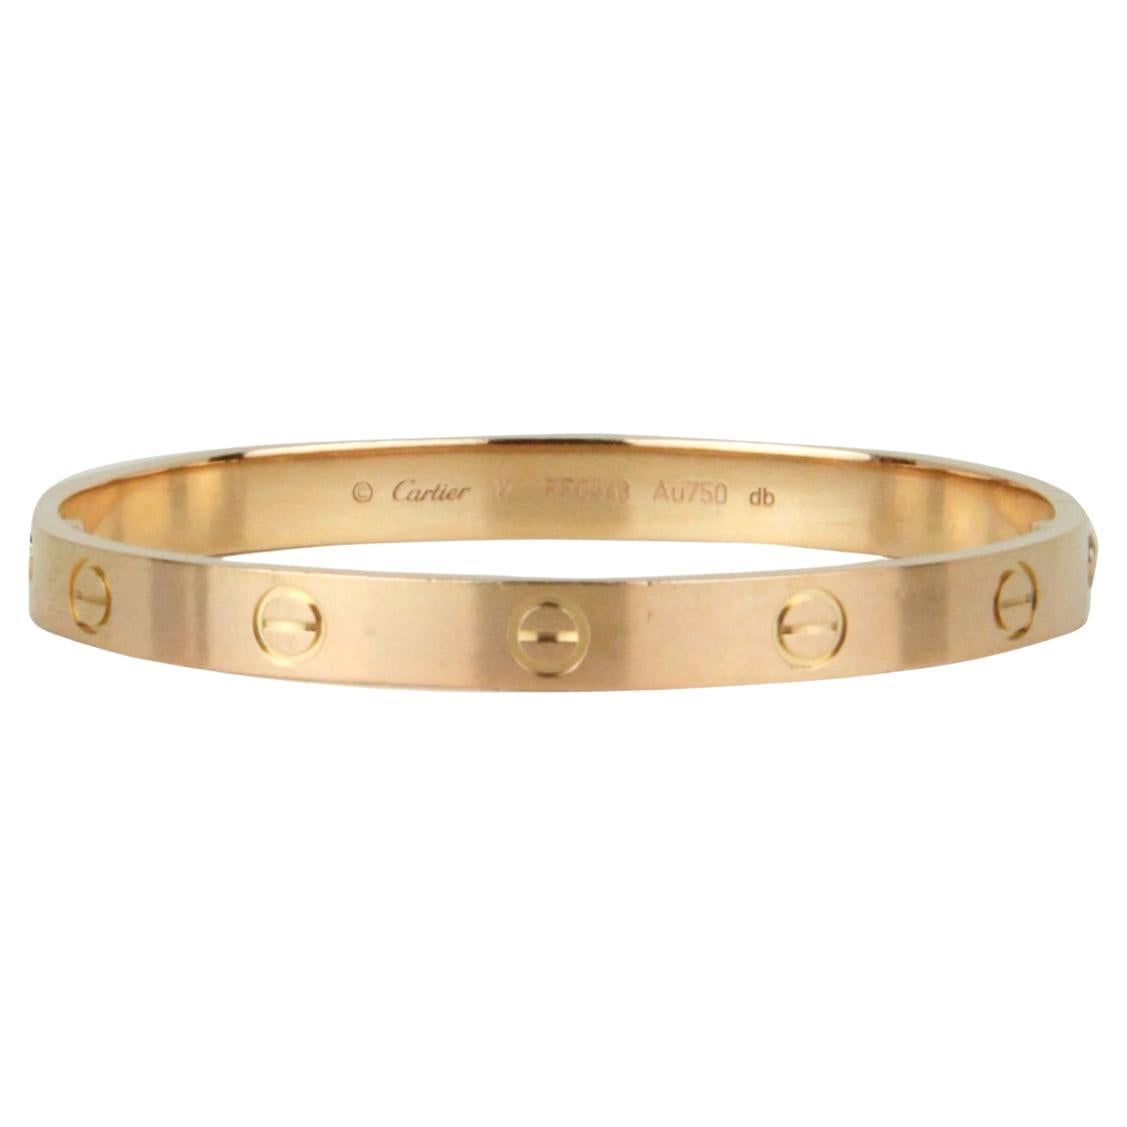 Cartier 18k Rose Gold LOVE Bangle Bracelet sz 17 w/ Certificate